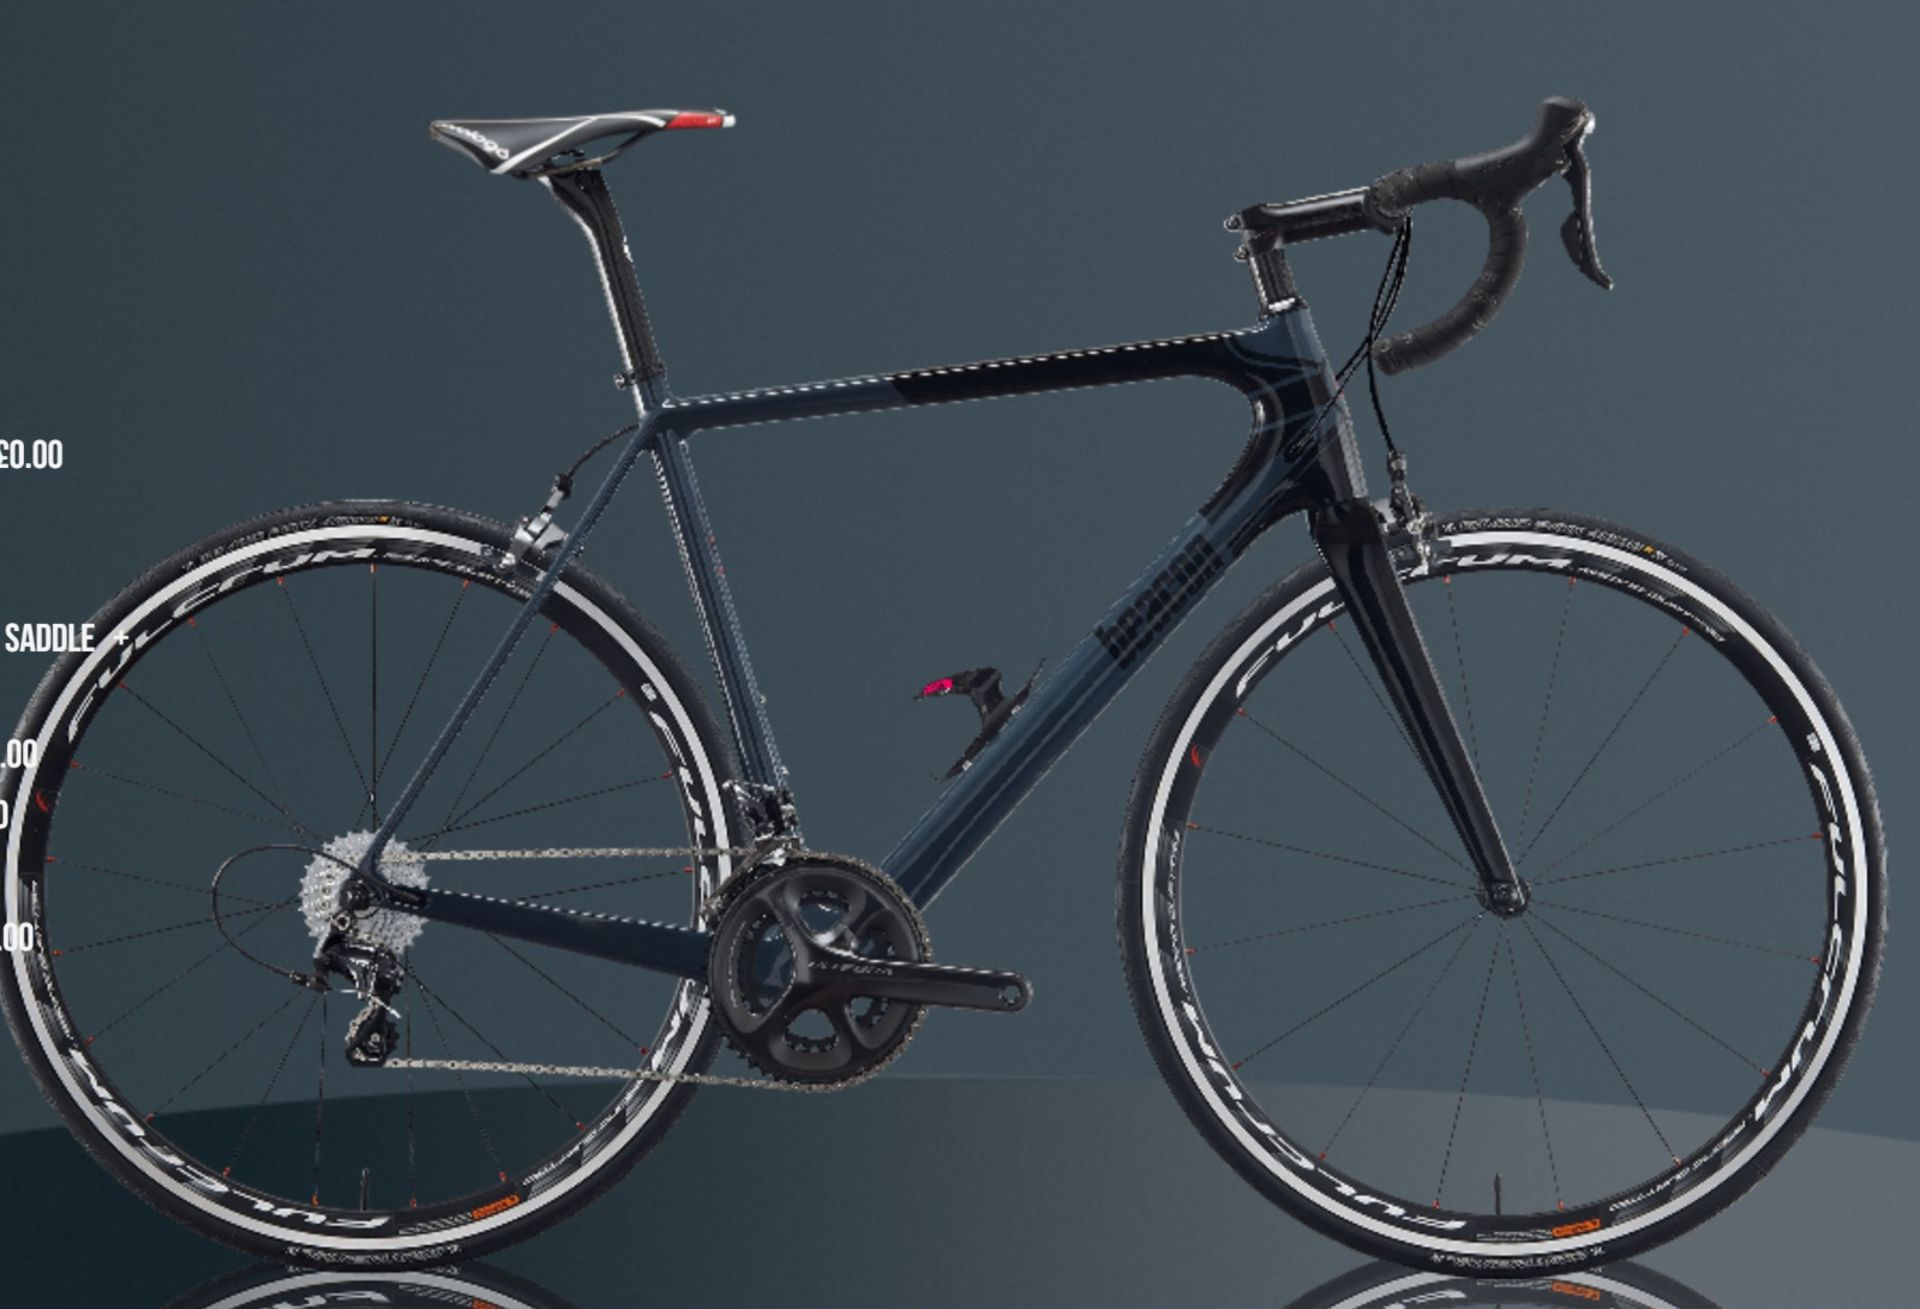 1 x Beacon Model BF-100, Size 570, Carbon Fibre Bike Frame in Black & Blue. - Image 2 of 3